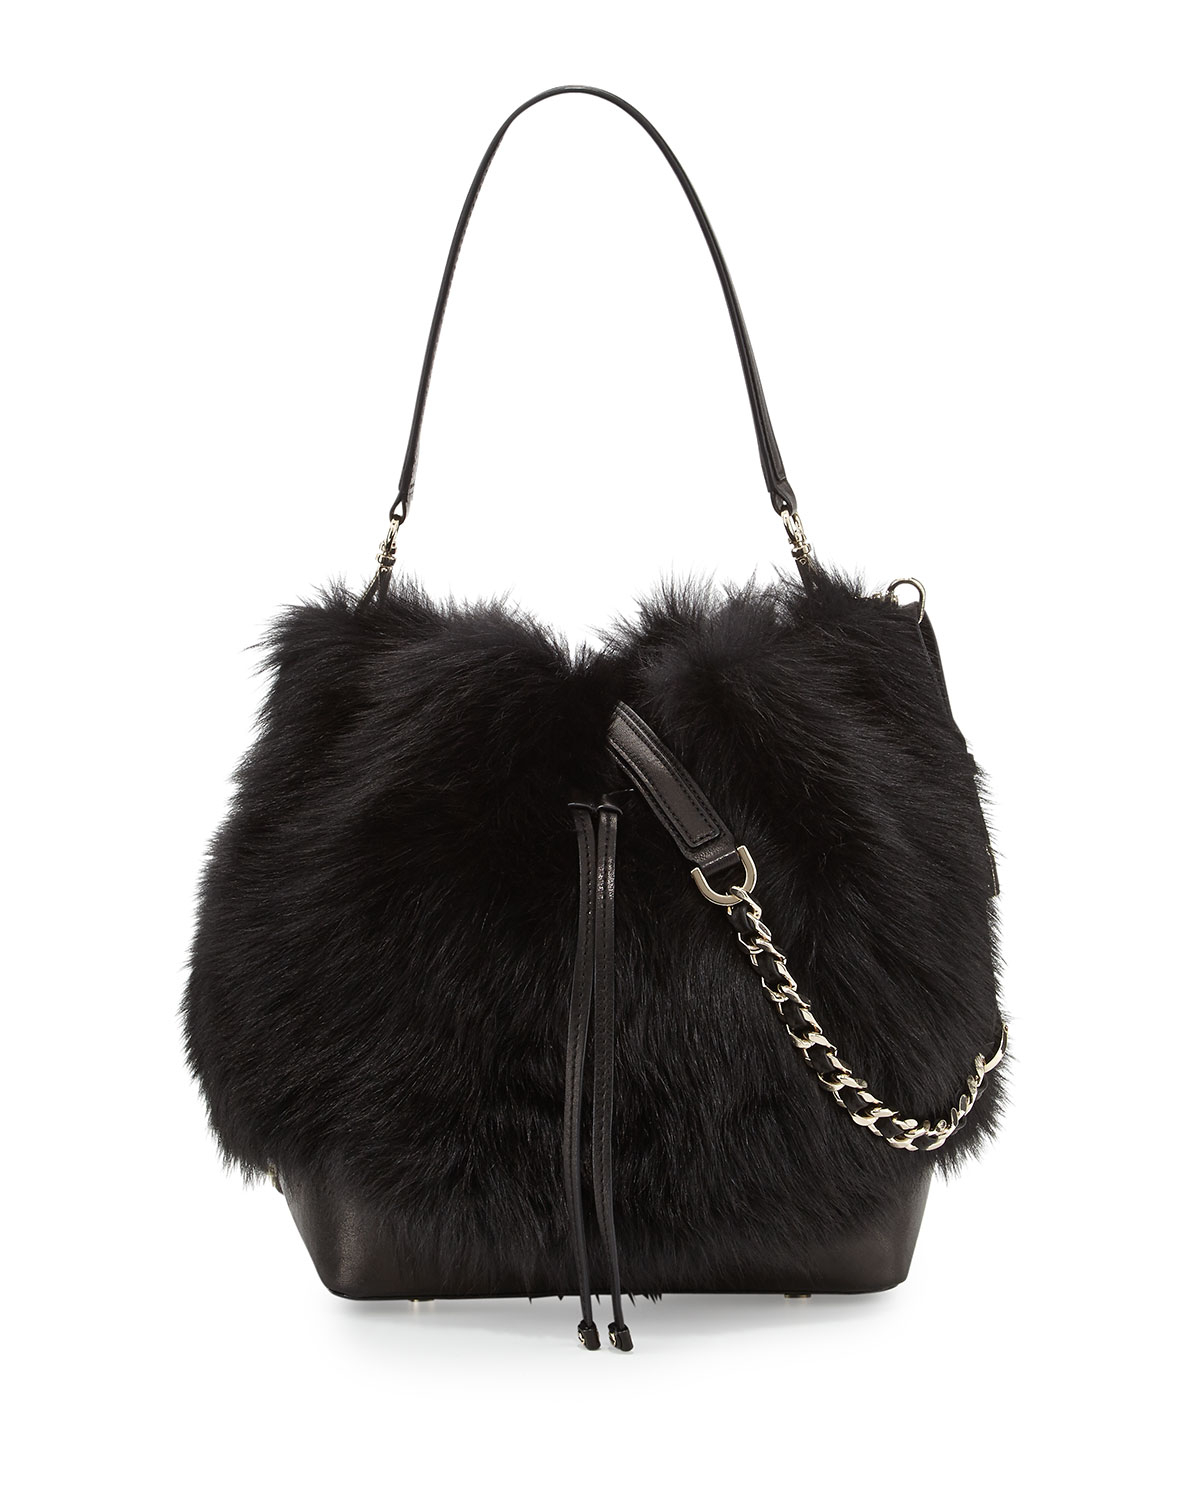 Alice + olivia Shearling Fur Bucket Bag in Black | Lyst